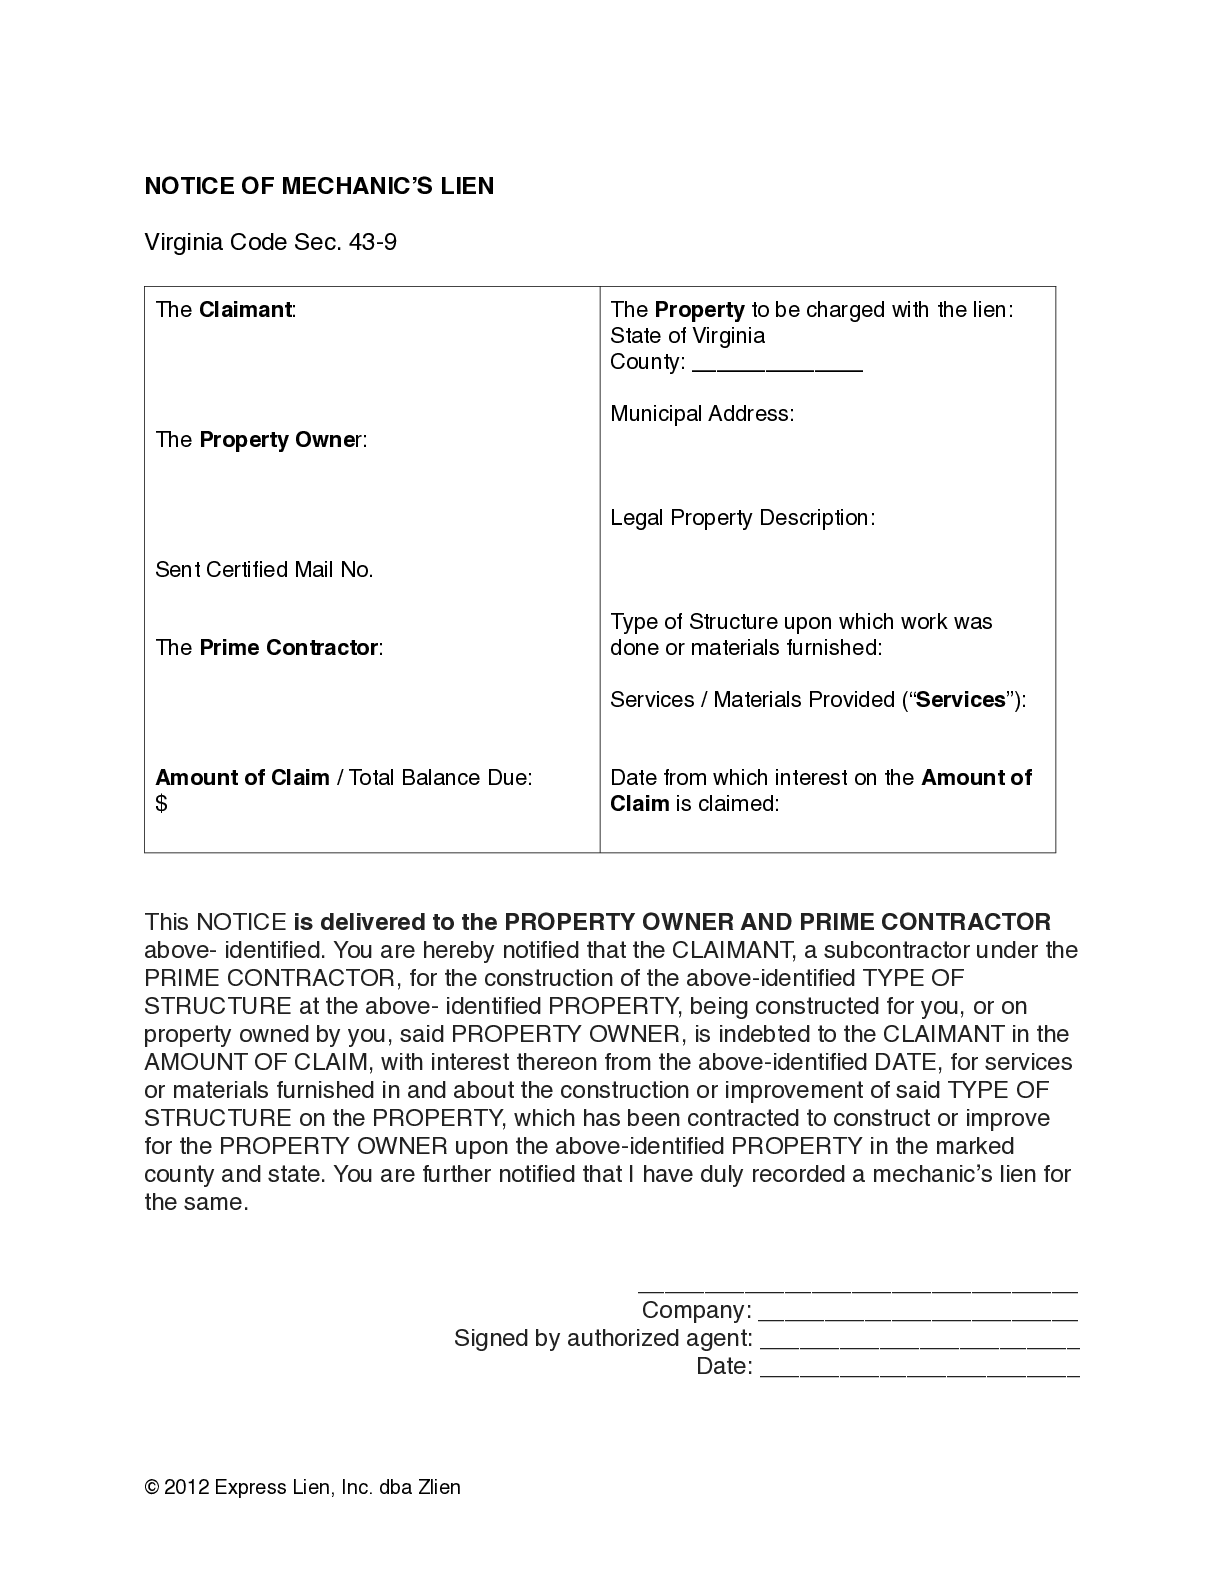 Virginia Memorandum of Lien for General Contractors Form - free from